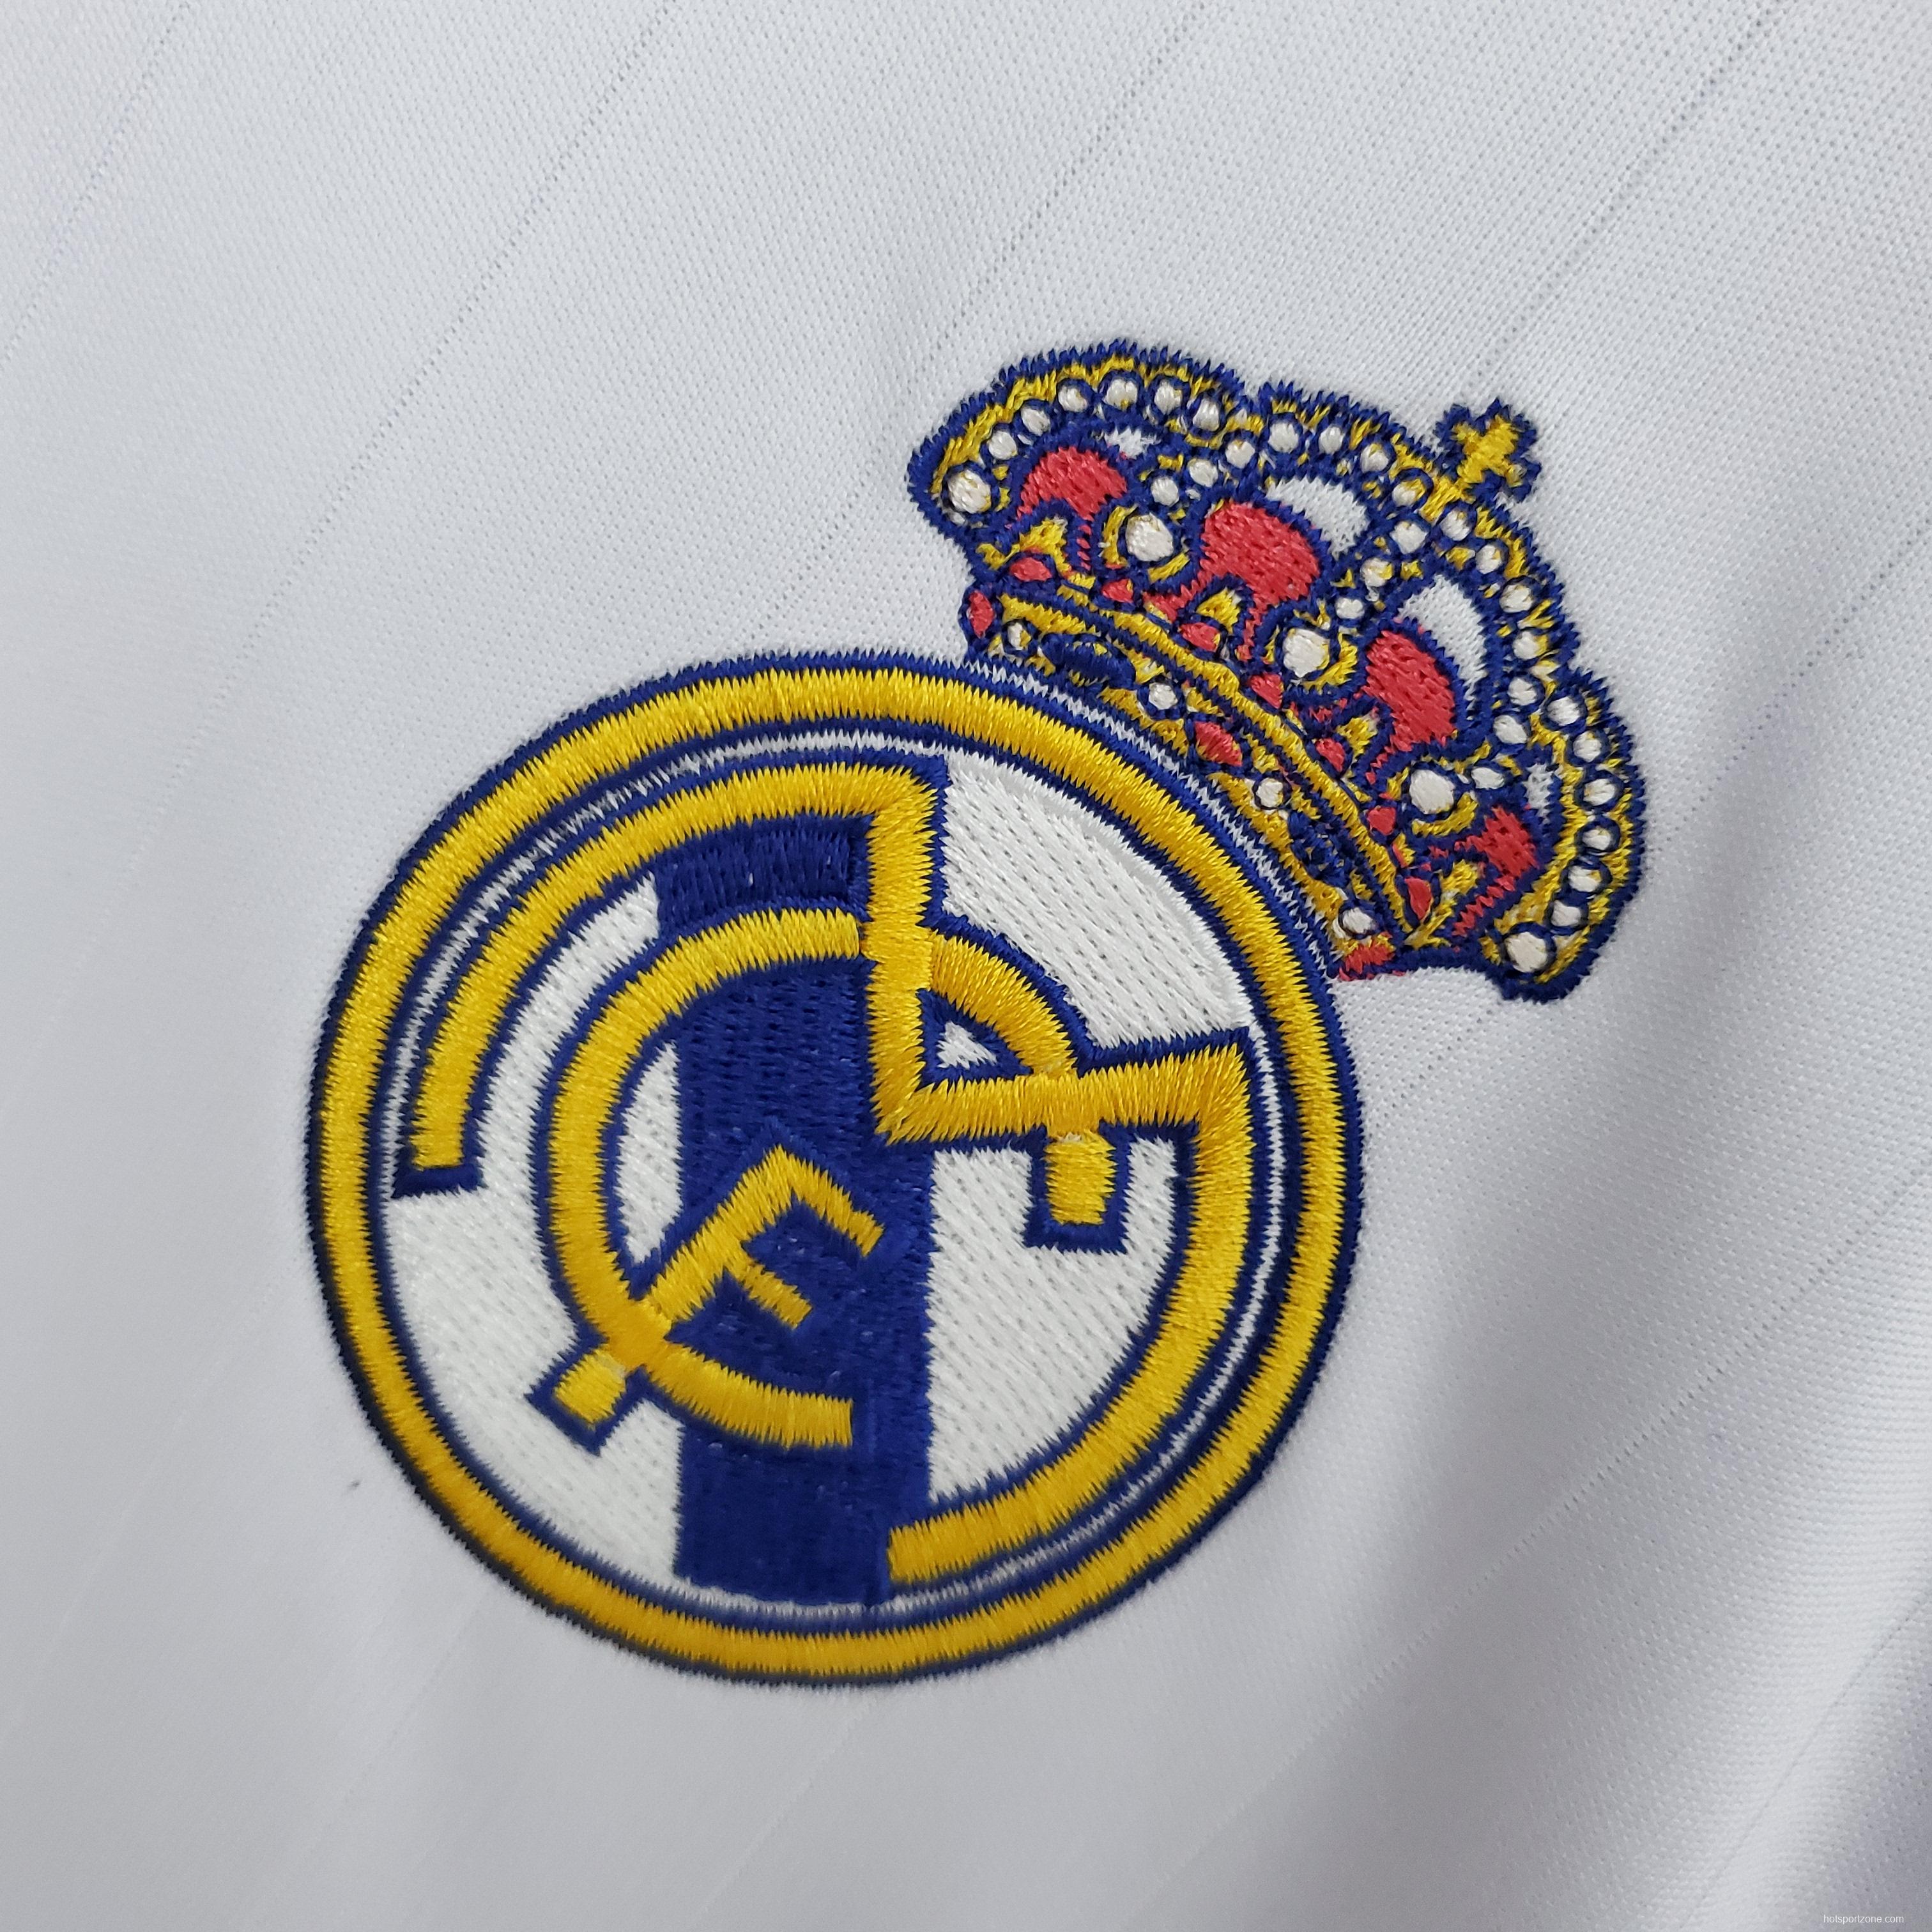 22/23 Real Madrid "Teamgeist" Series White Jersey